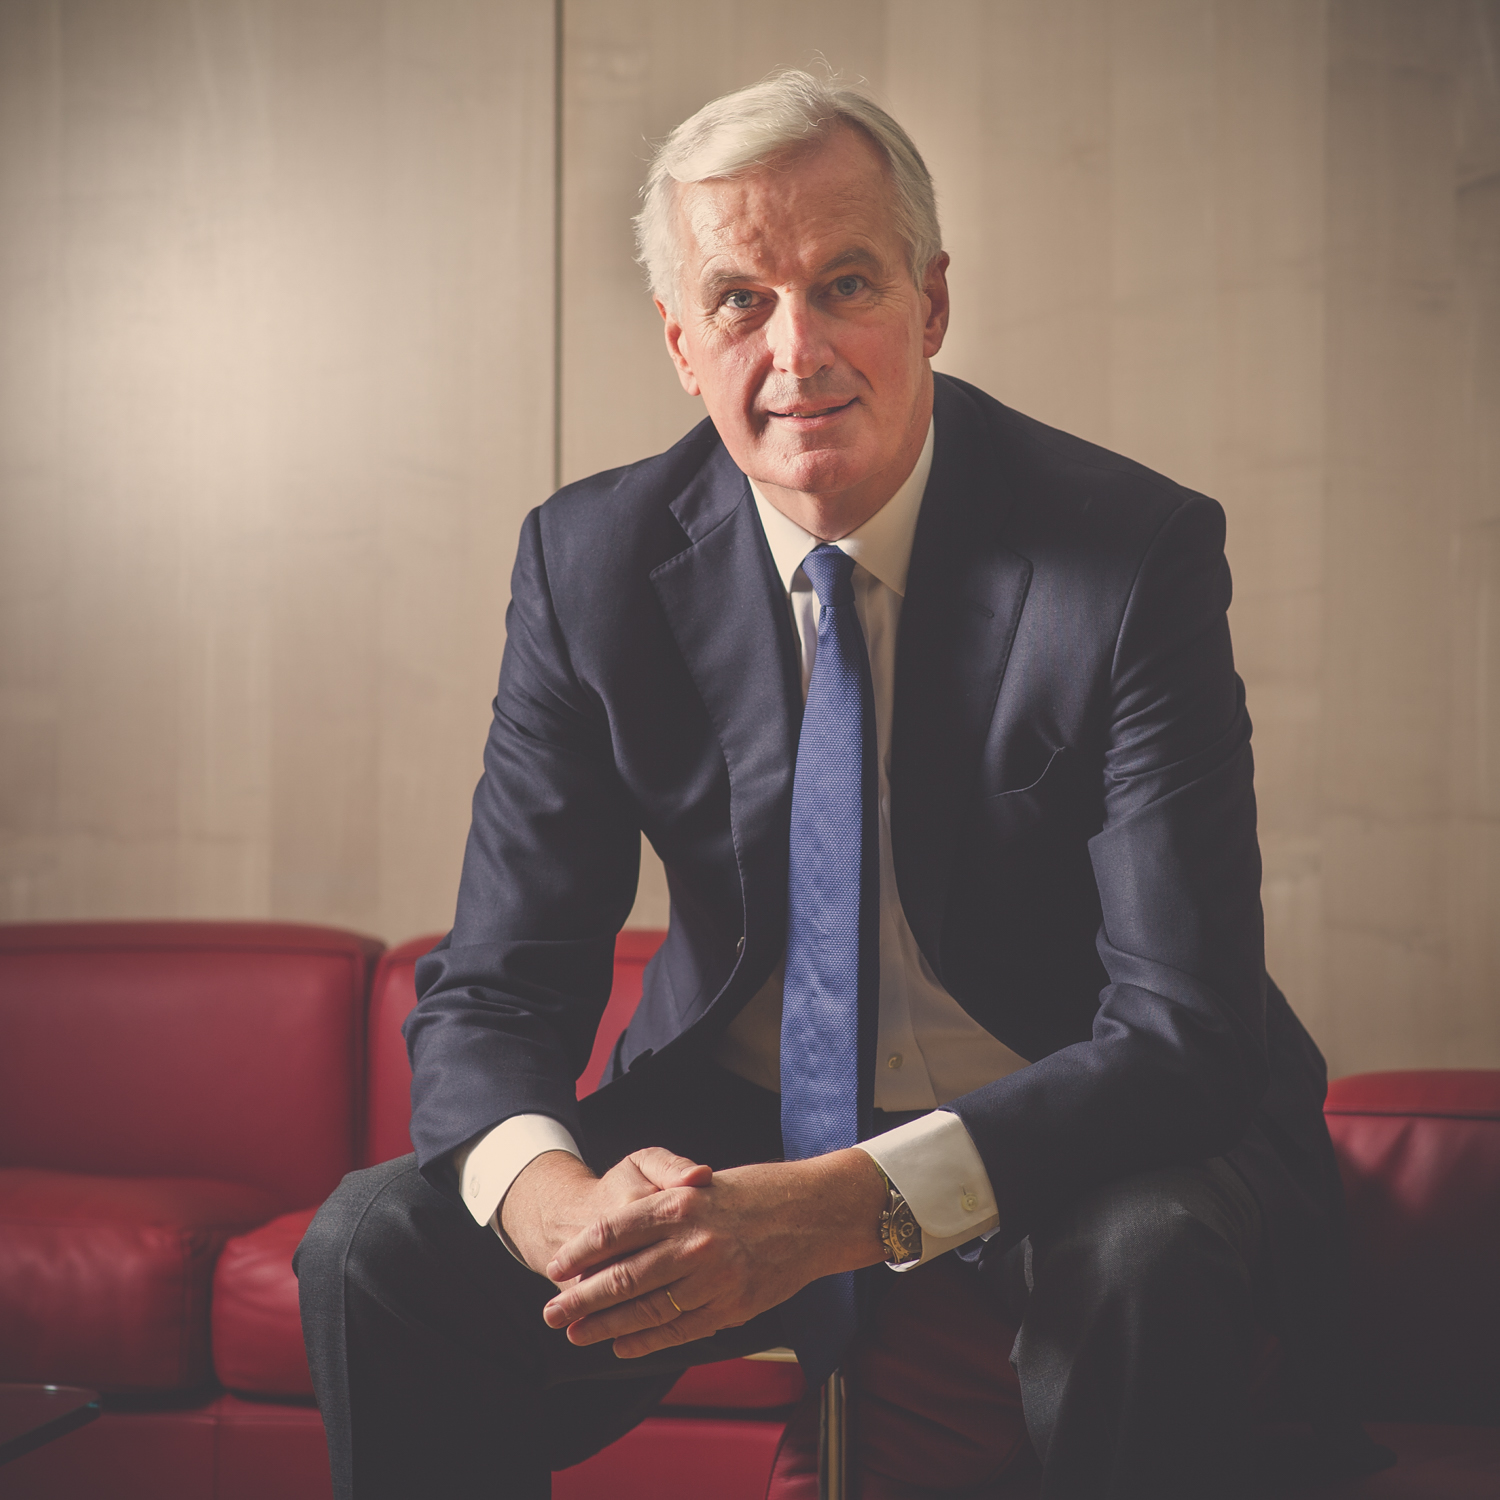 M. Barnier for Libération